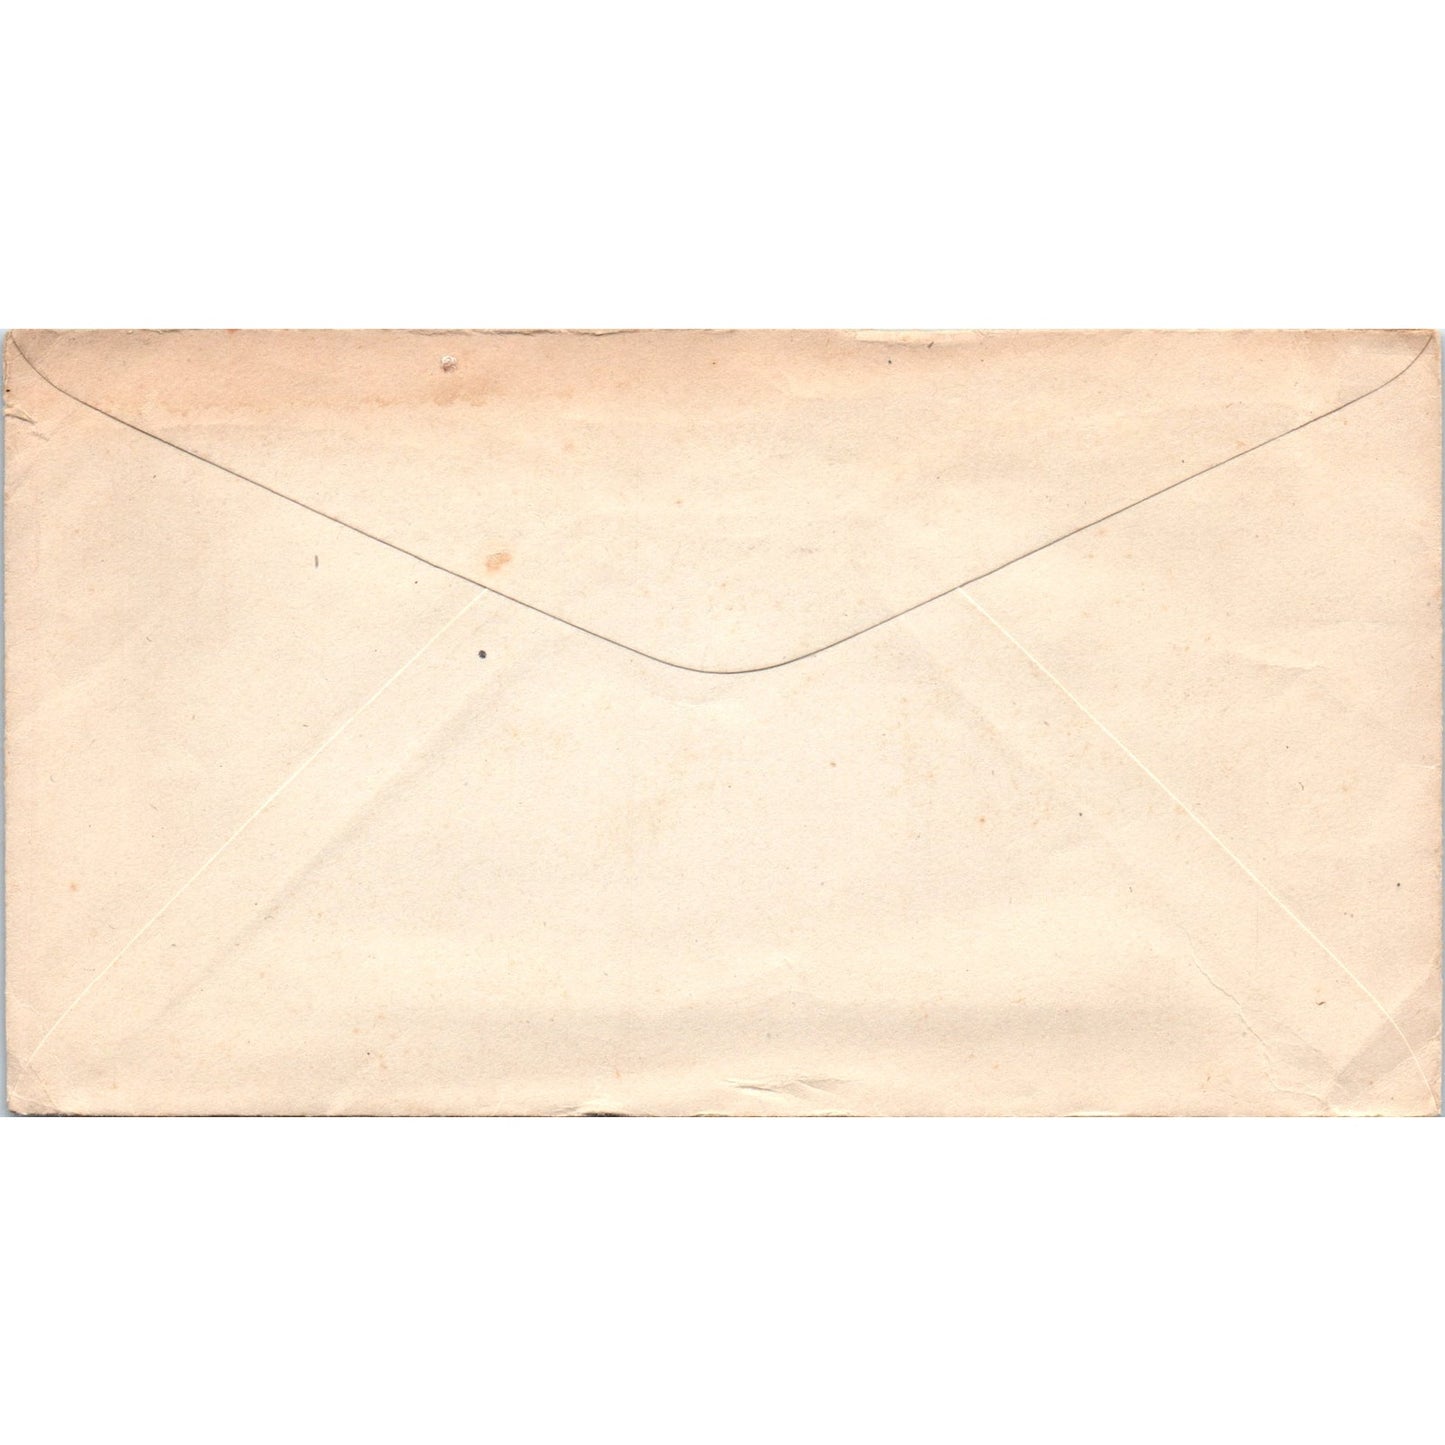 1921 Austin Boyd Co Philadelphia to Schwenksville Postal Cover Envelope TG7-PC3